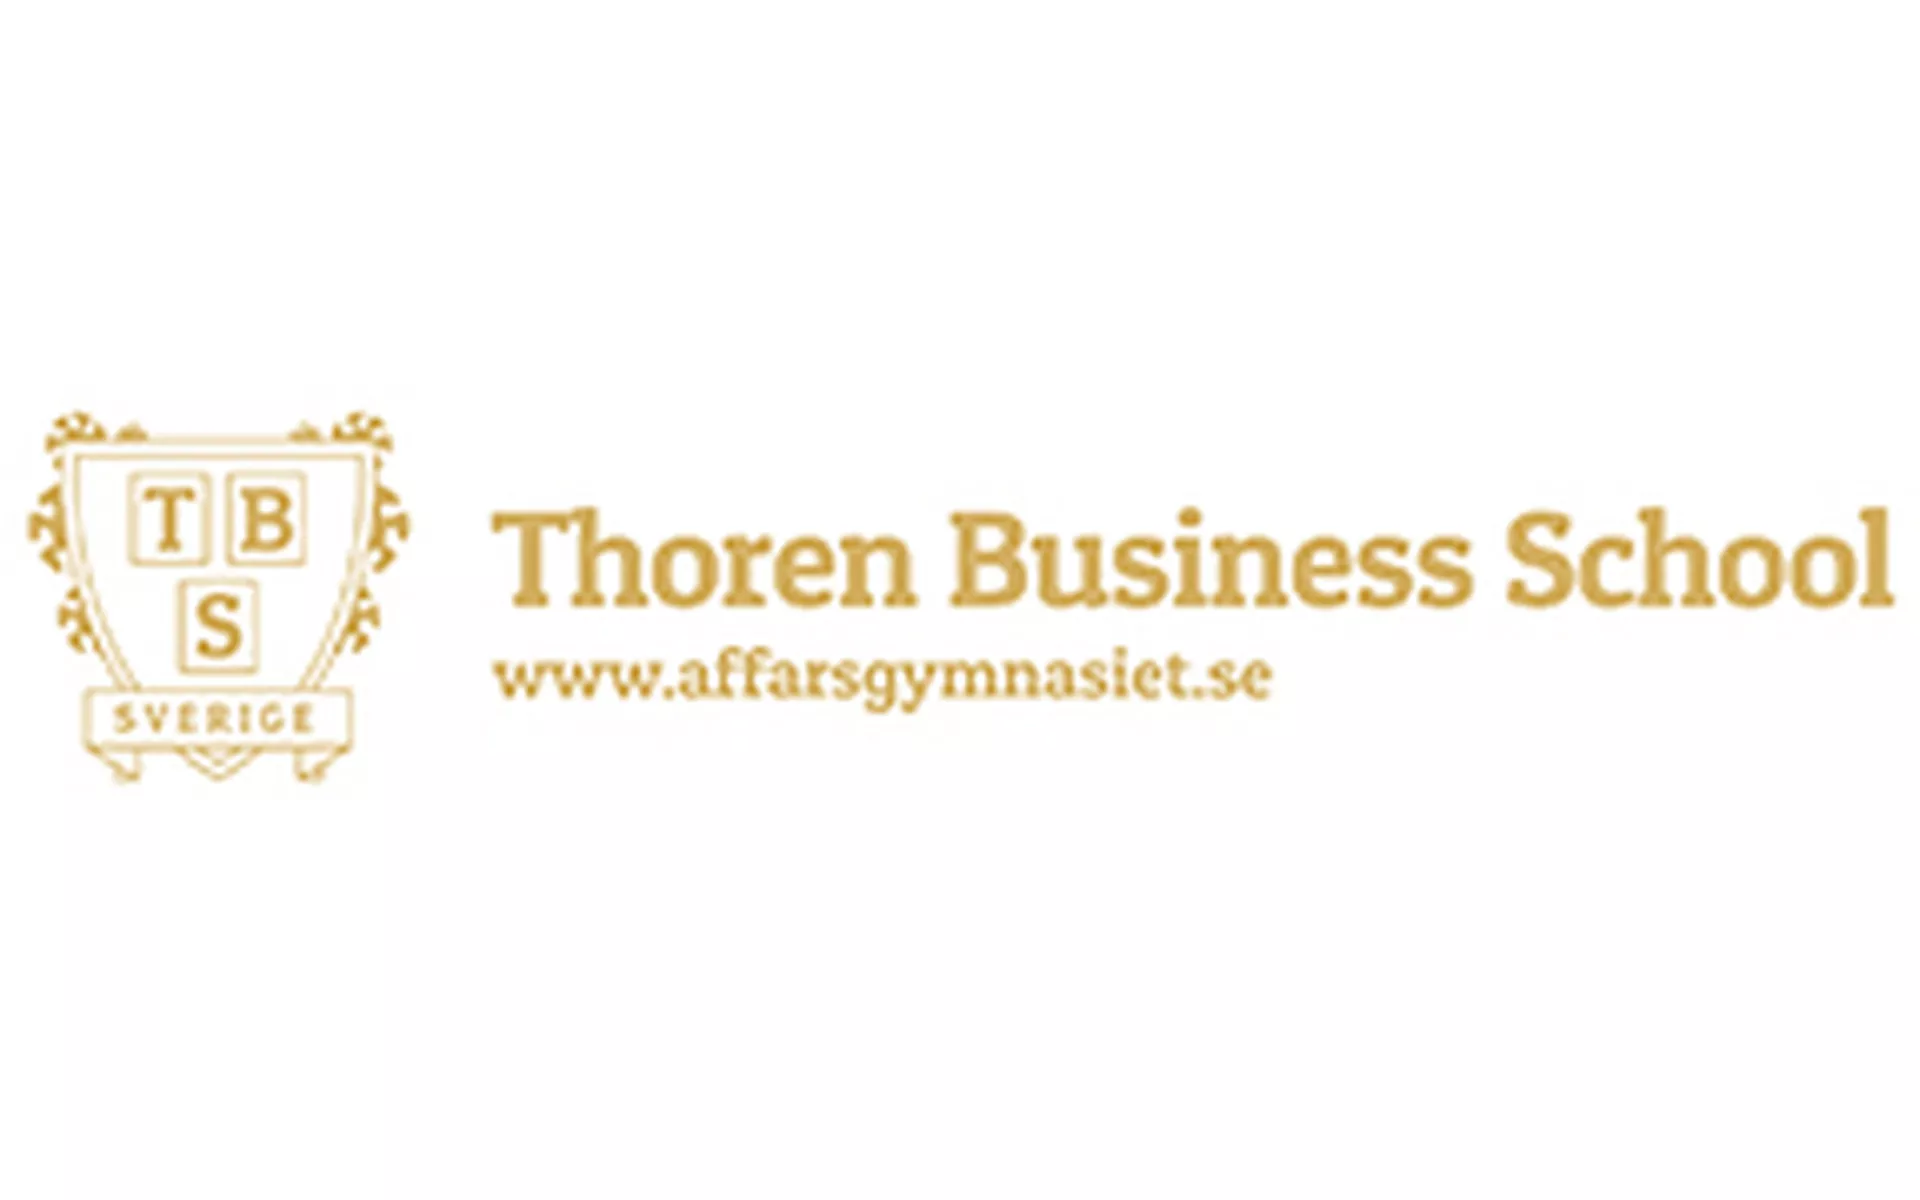 Thoren Business School Västerås